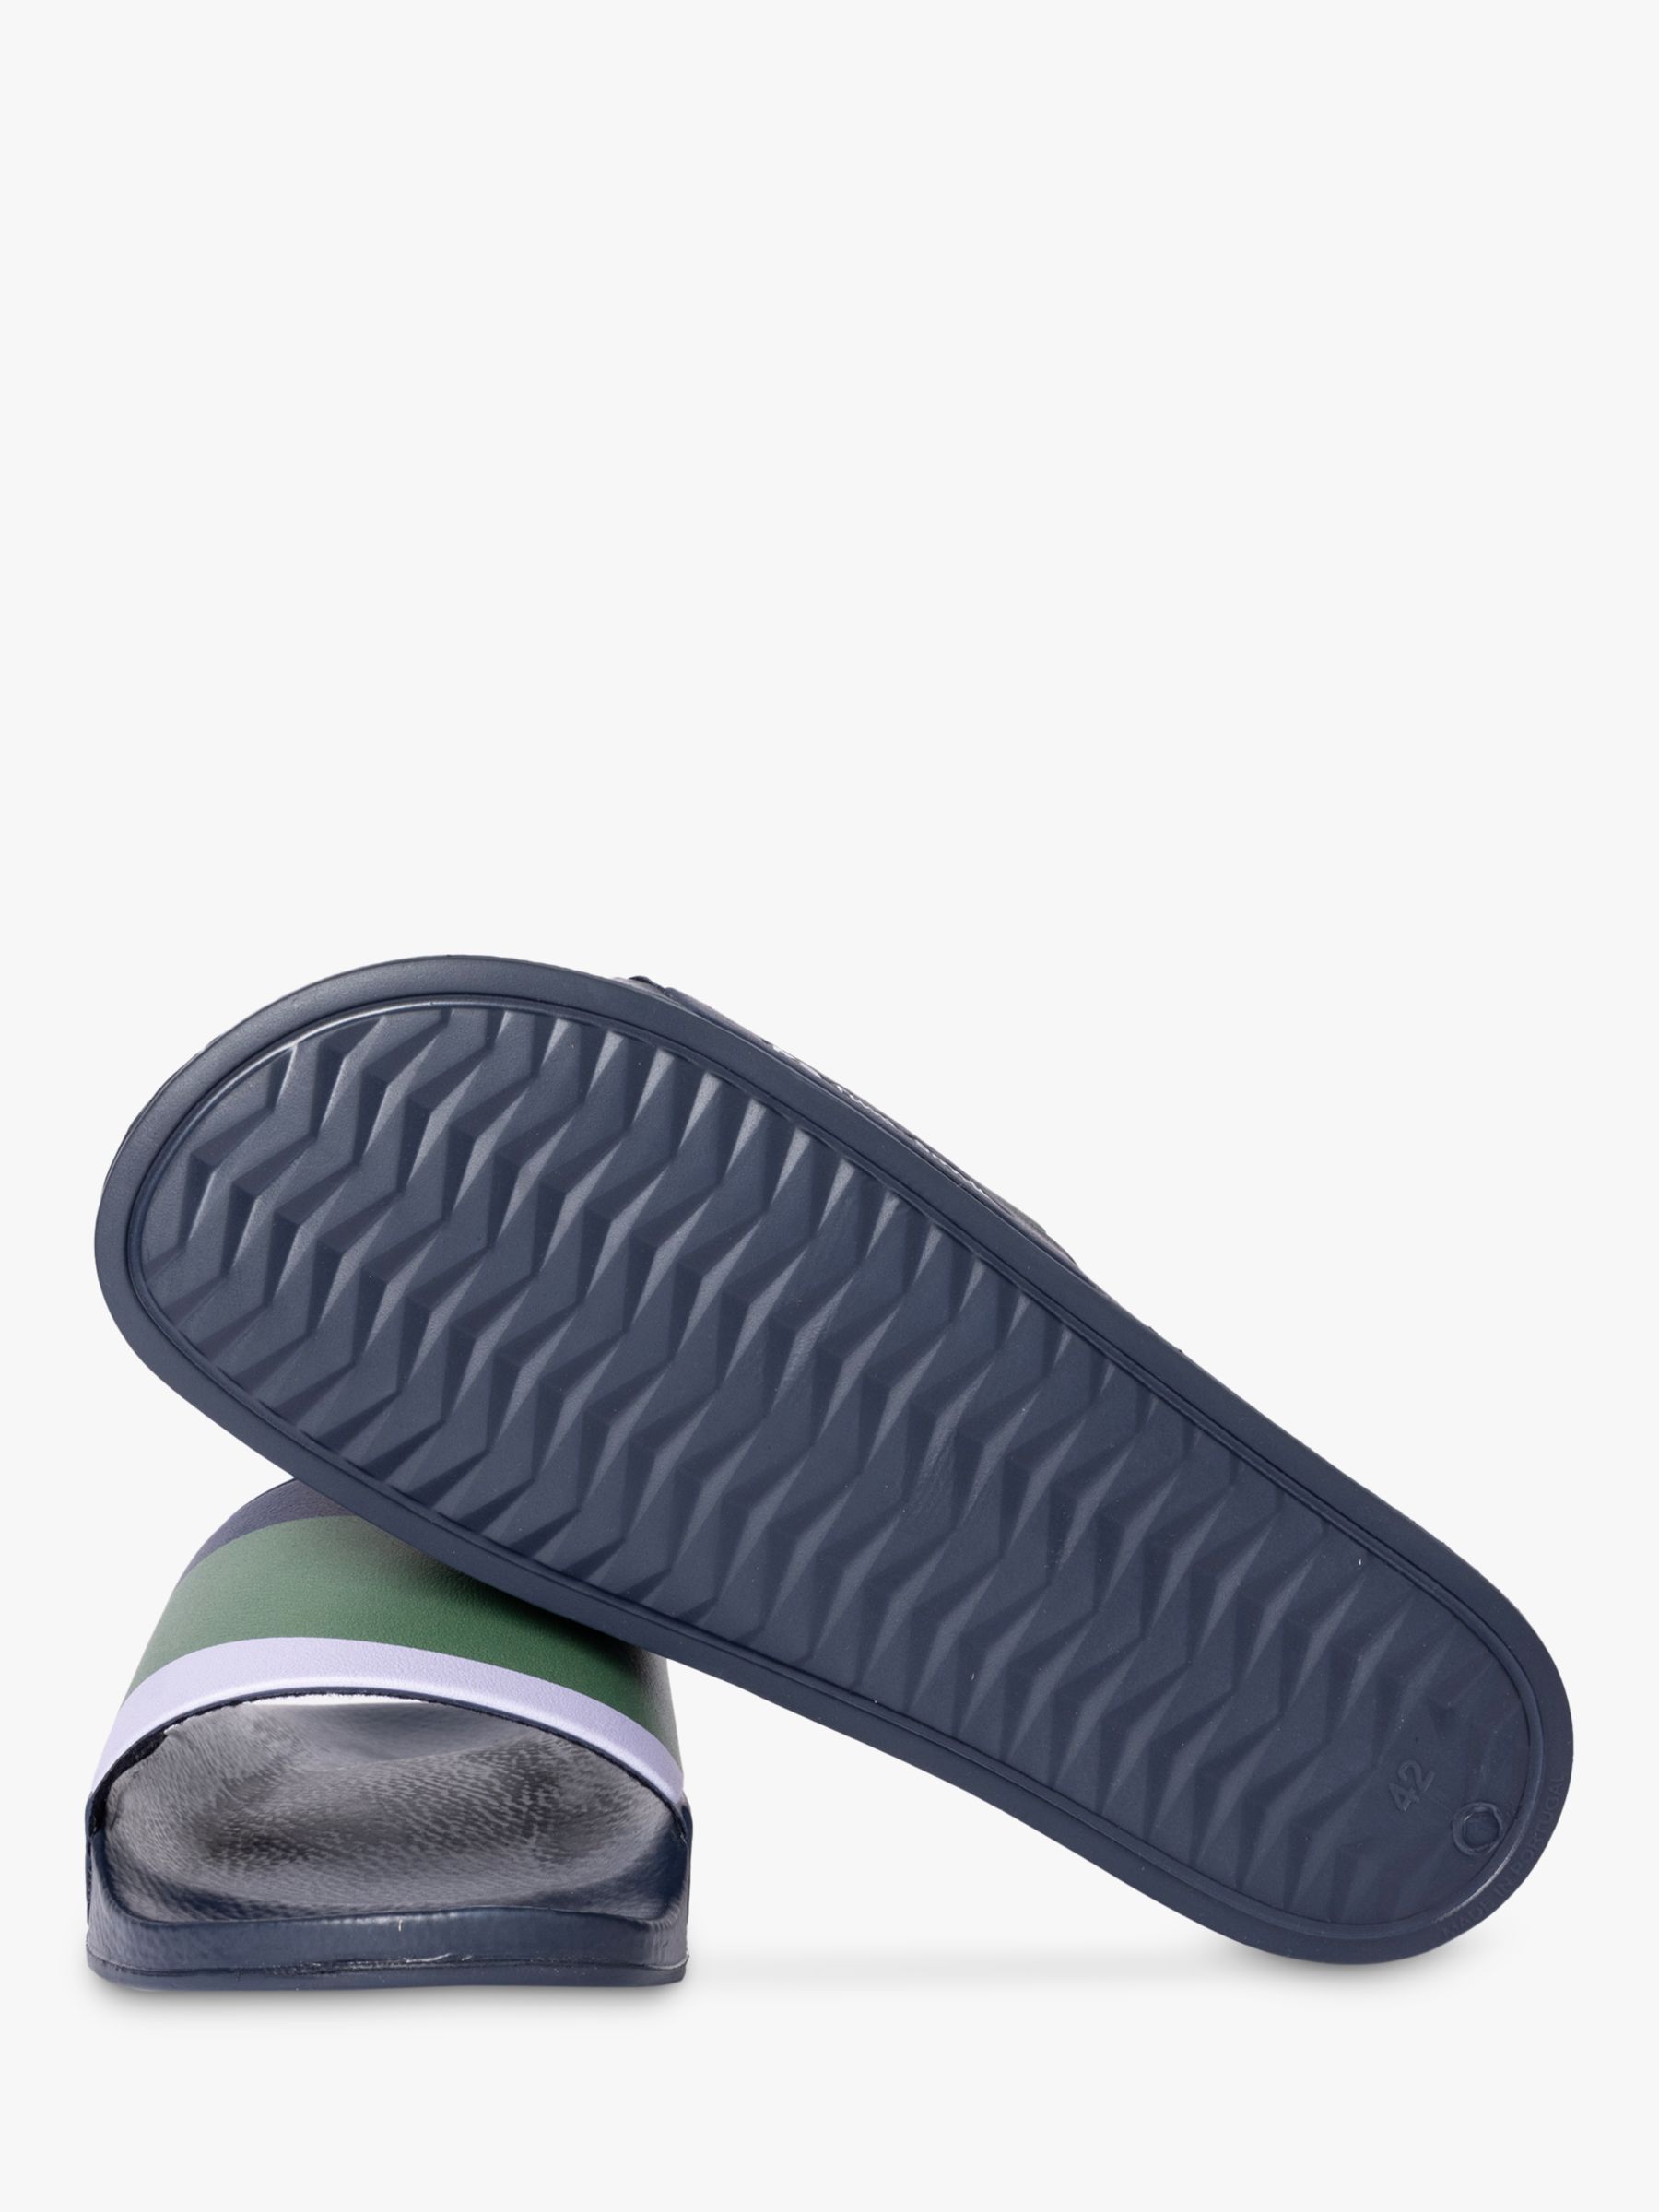 Paul Smith Nyro Slider Sandals, Navy/Multi, 7